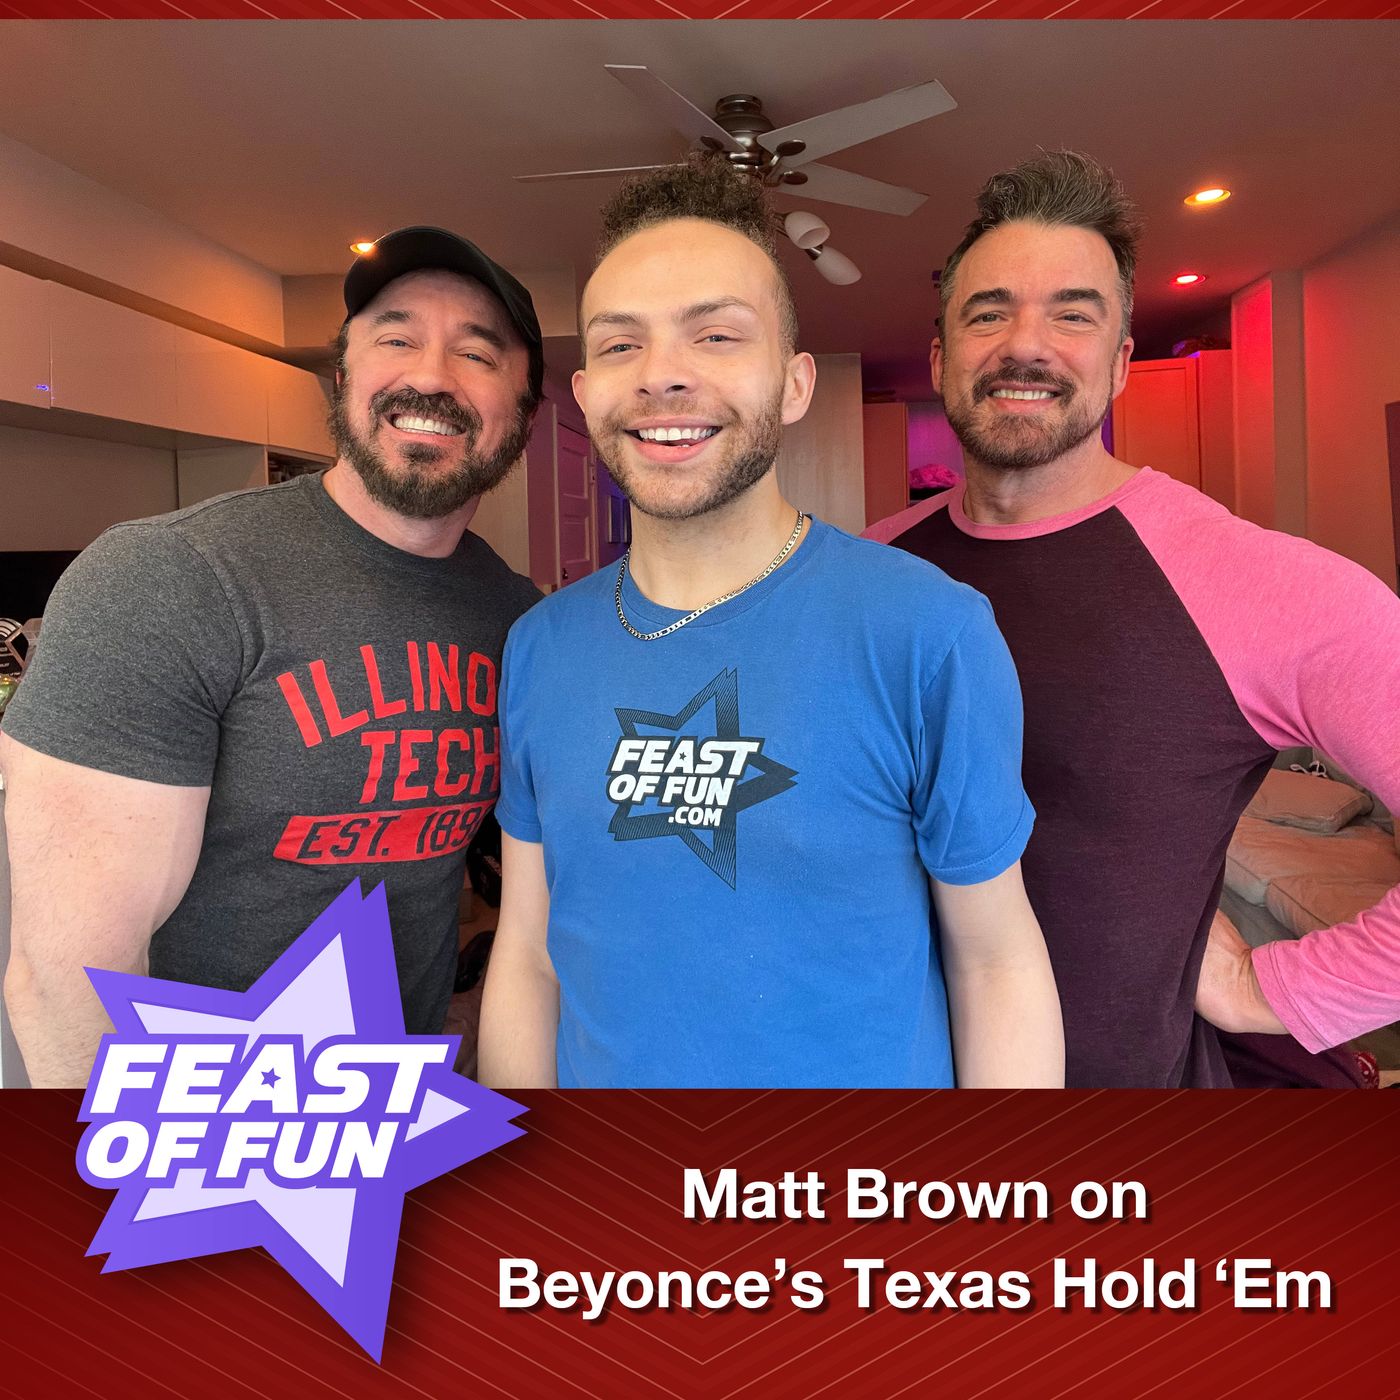 Matt Brown on Beyonce’s Texas Hold ’Em